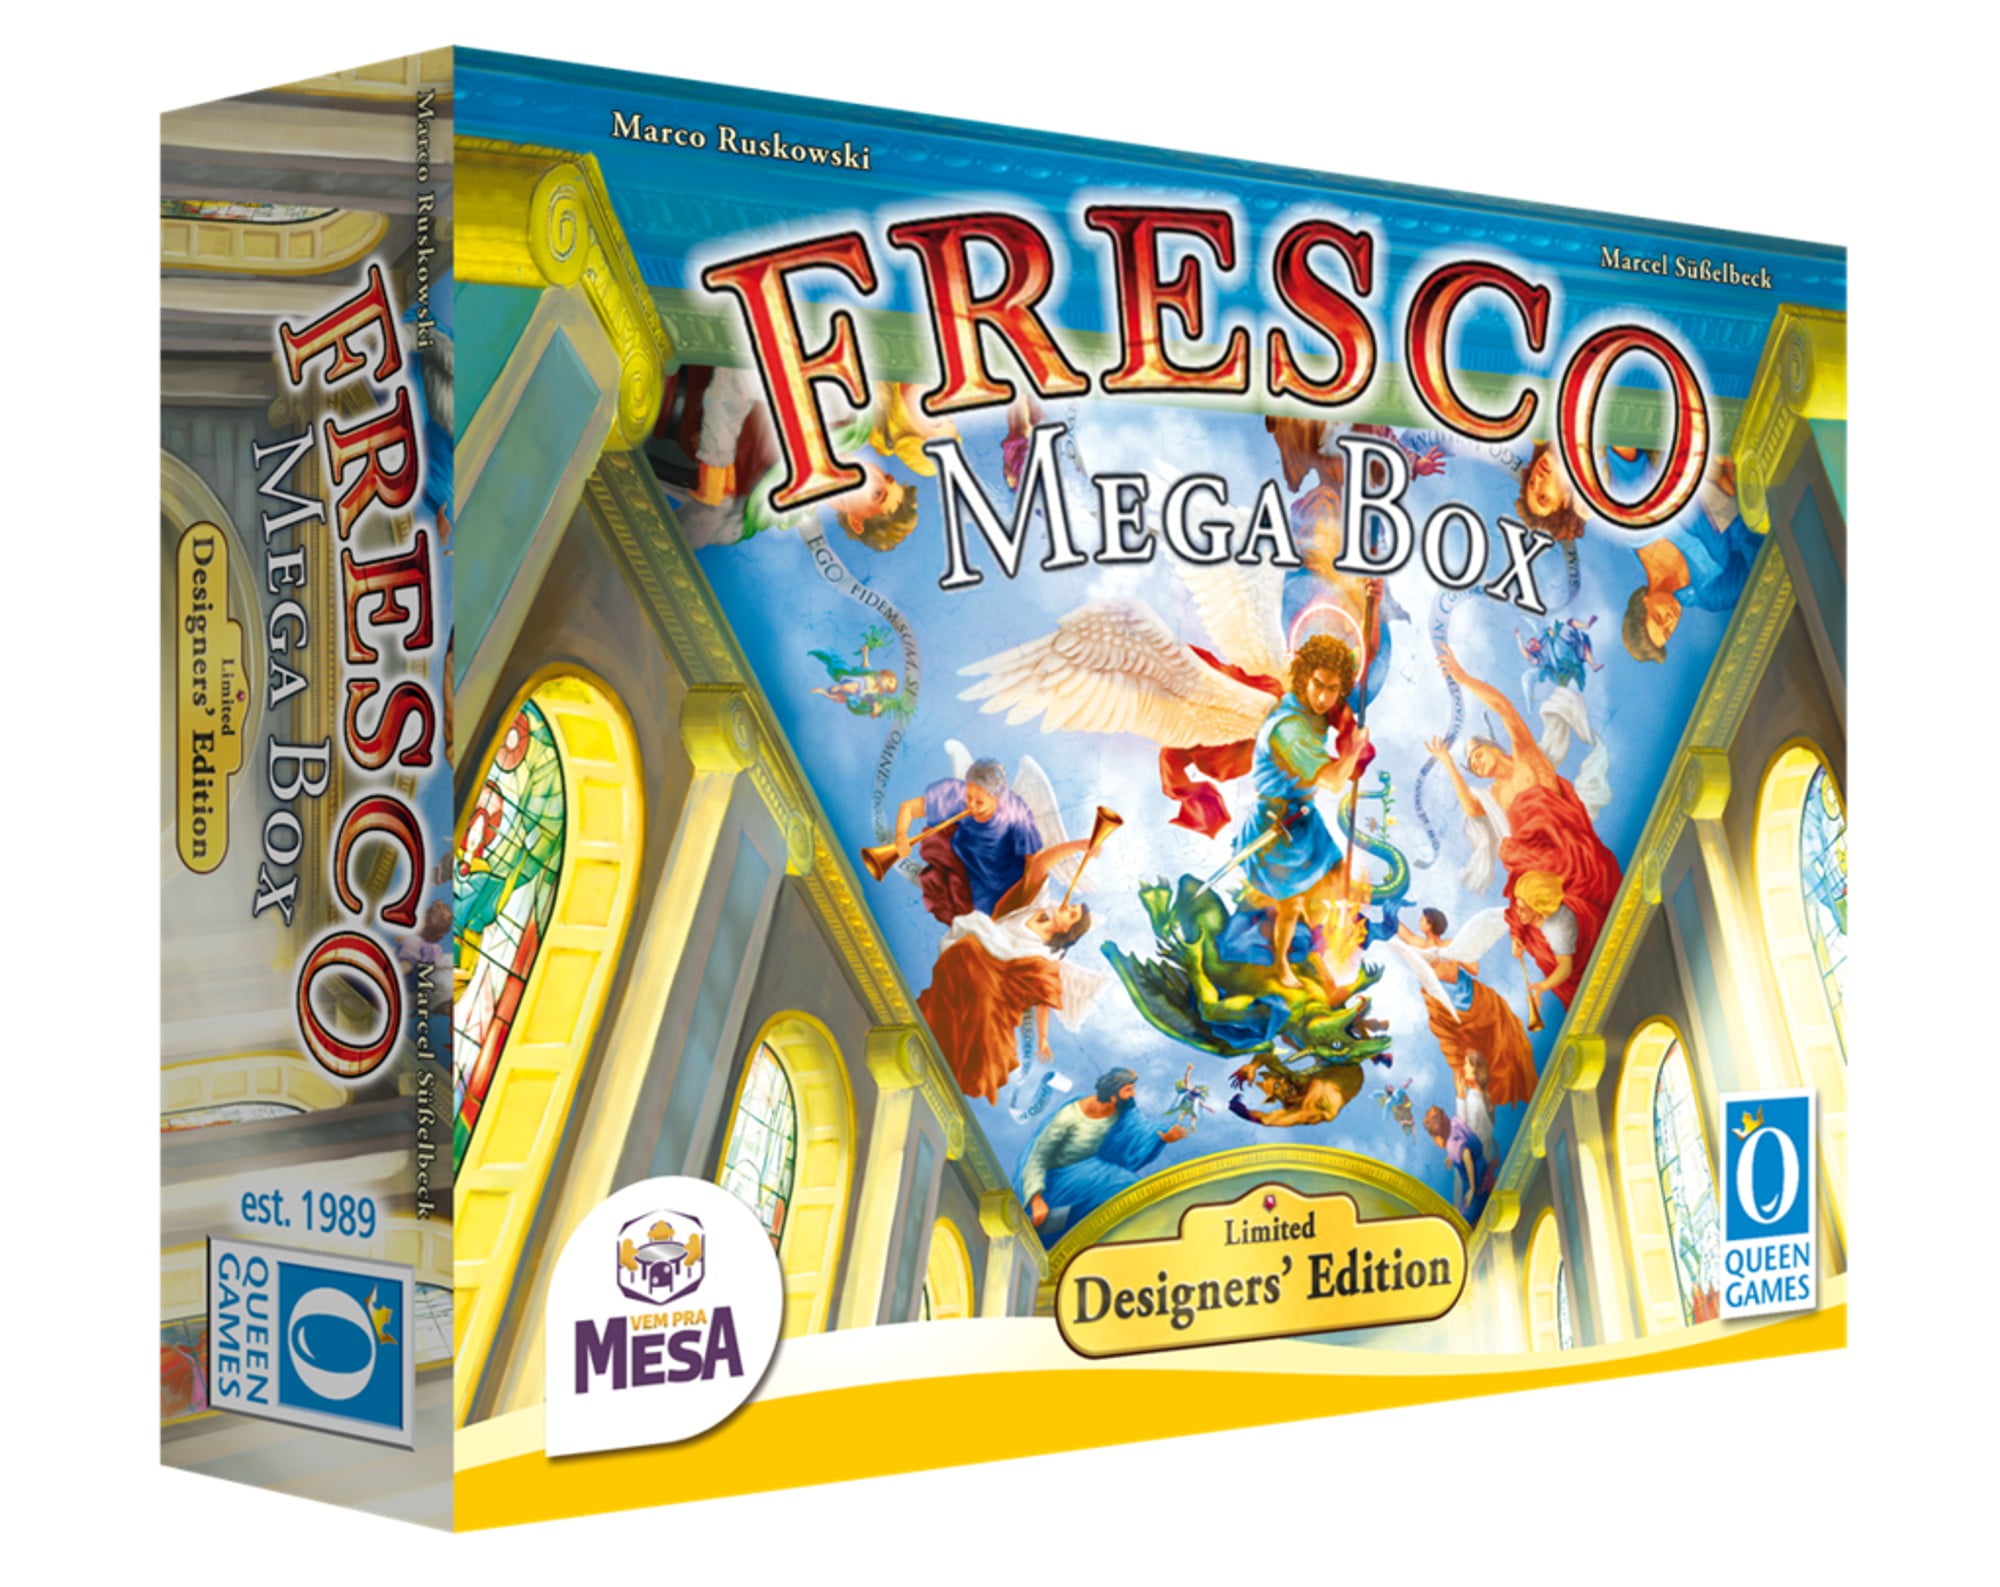 Fresco Mega Box